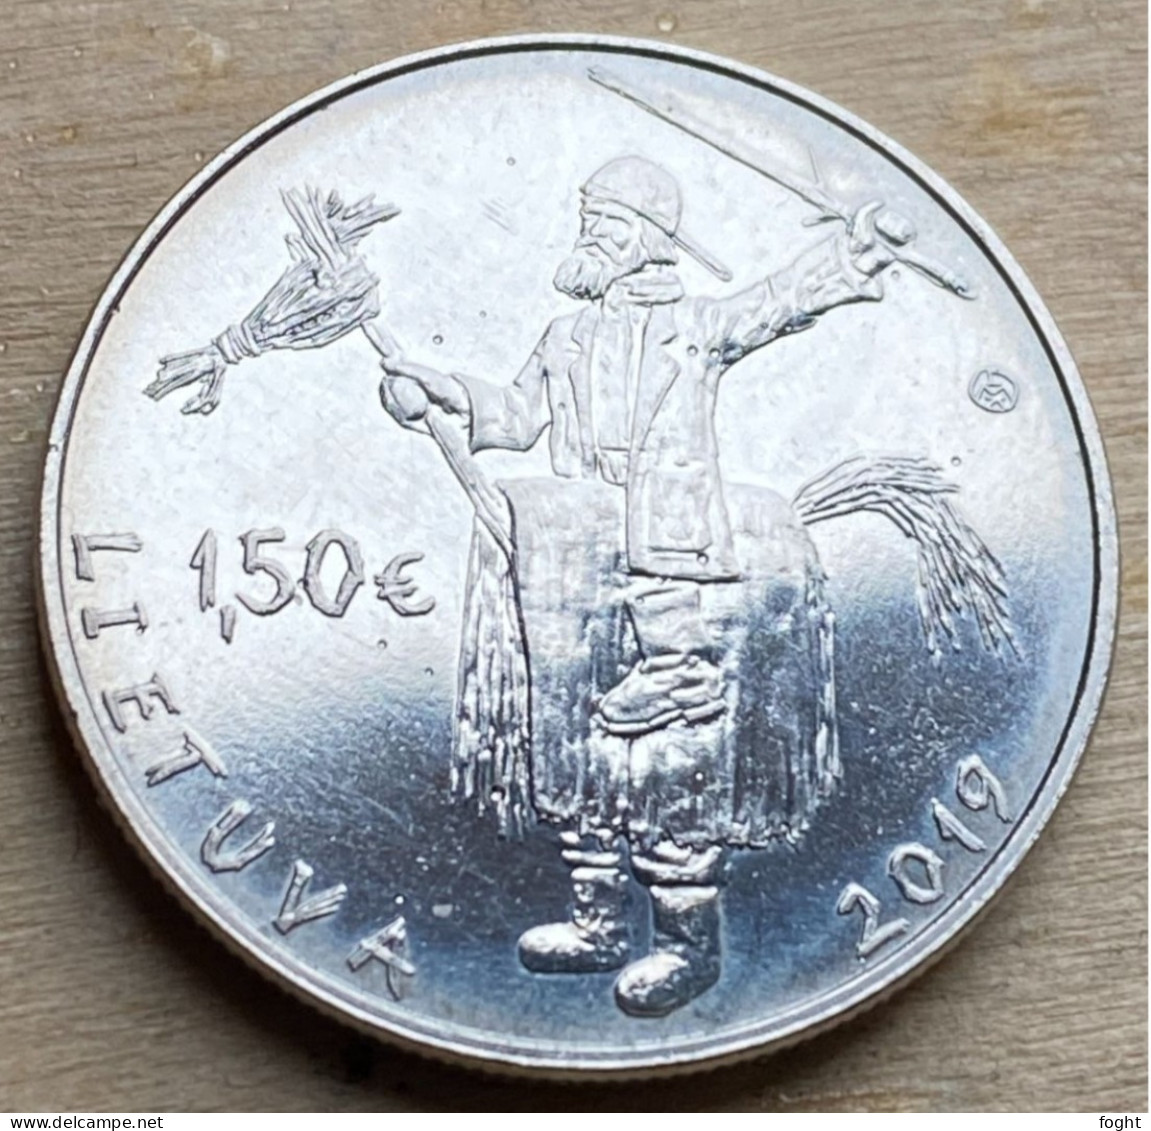 2019 LMK Lithuania "Traditional Lithuanian Celebrations" 1.5 Euro Coin,KM#234,7119 - Lithuania